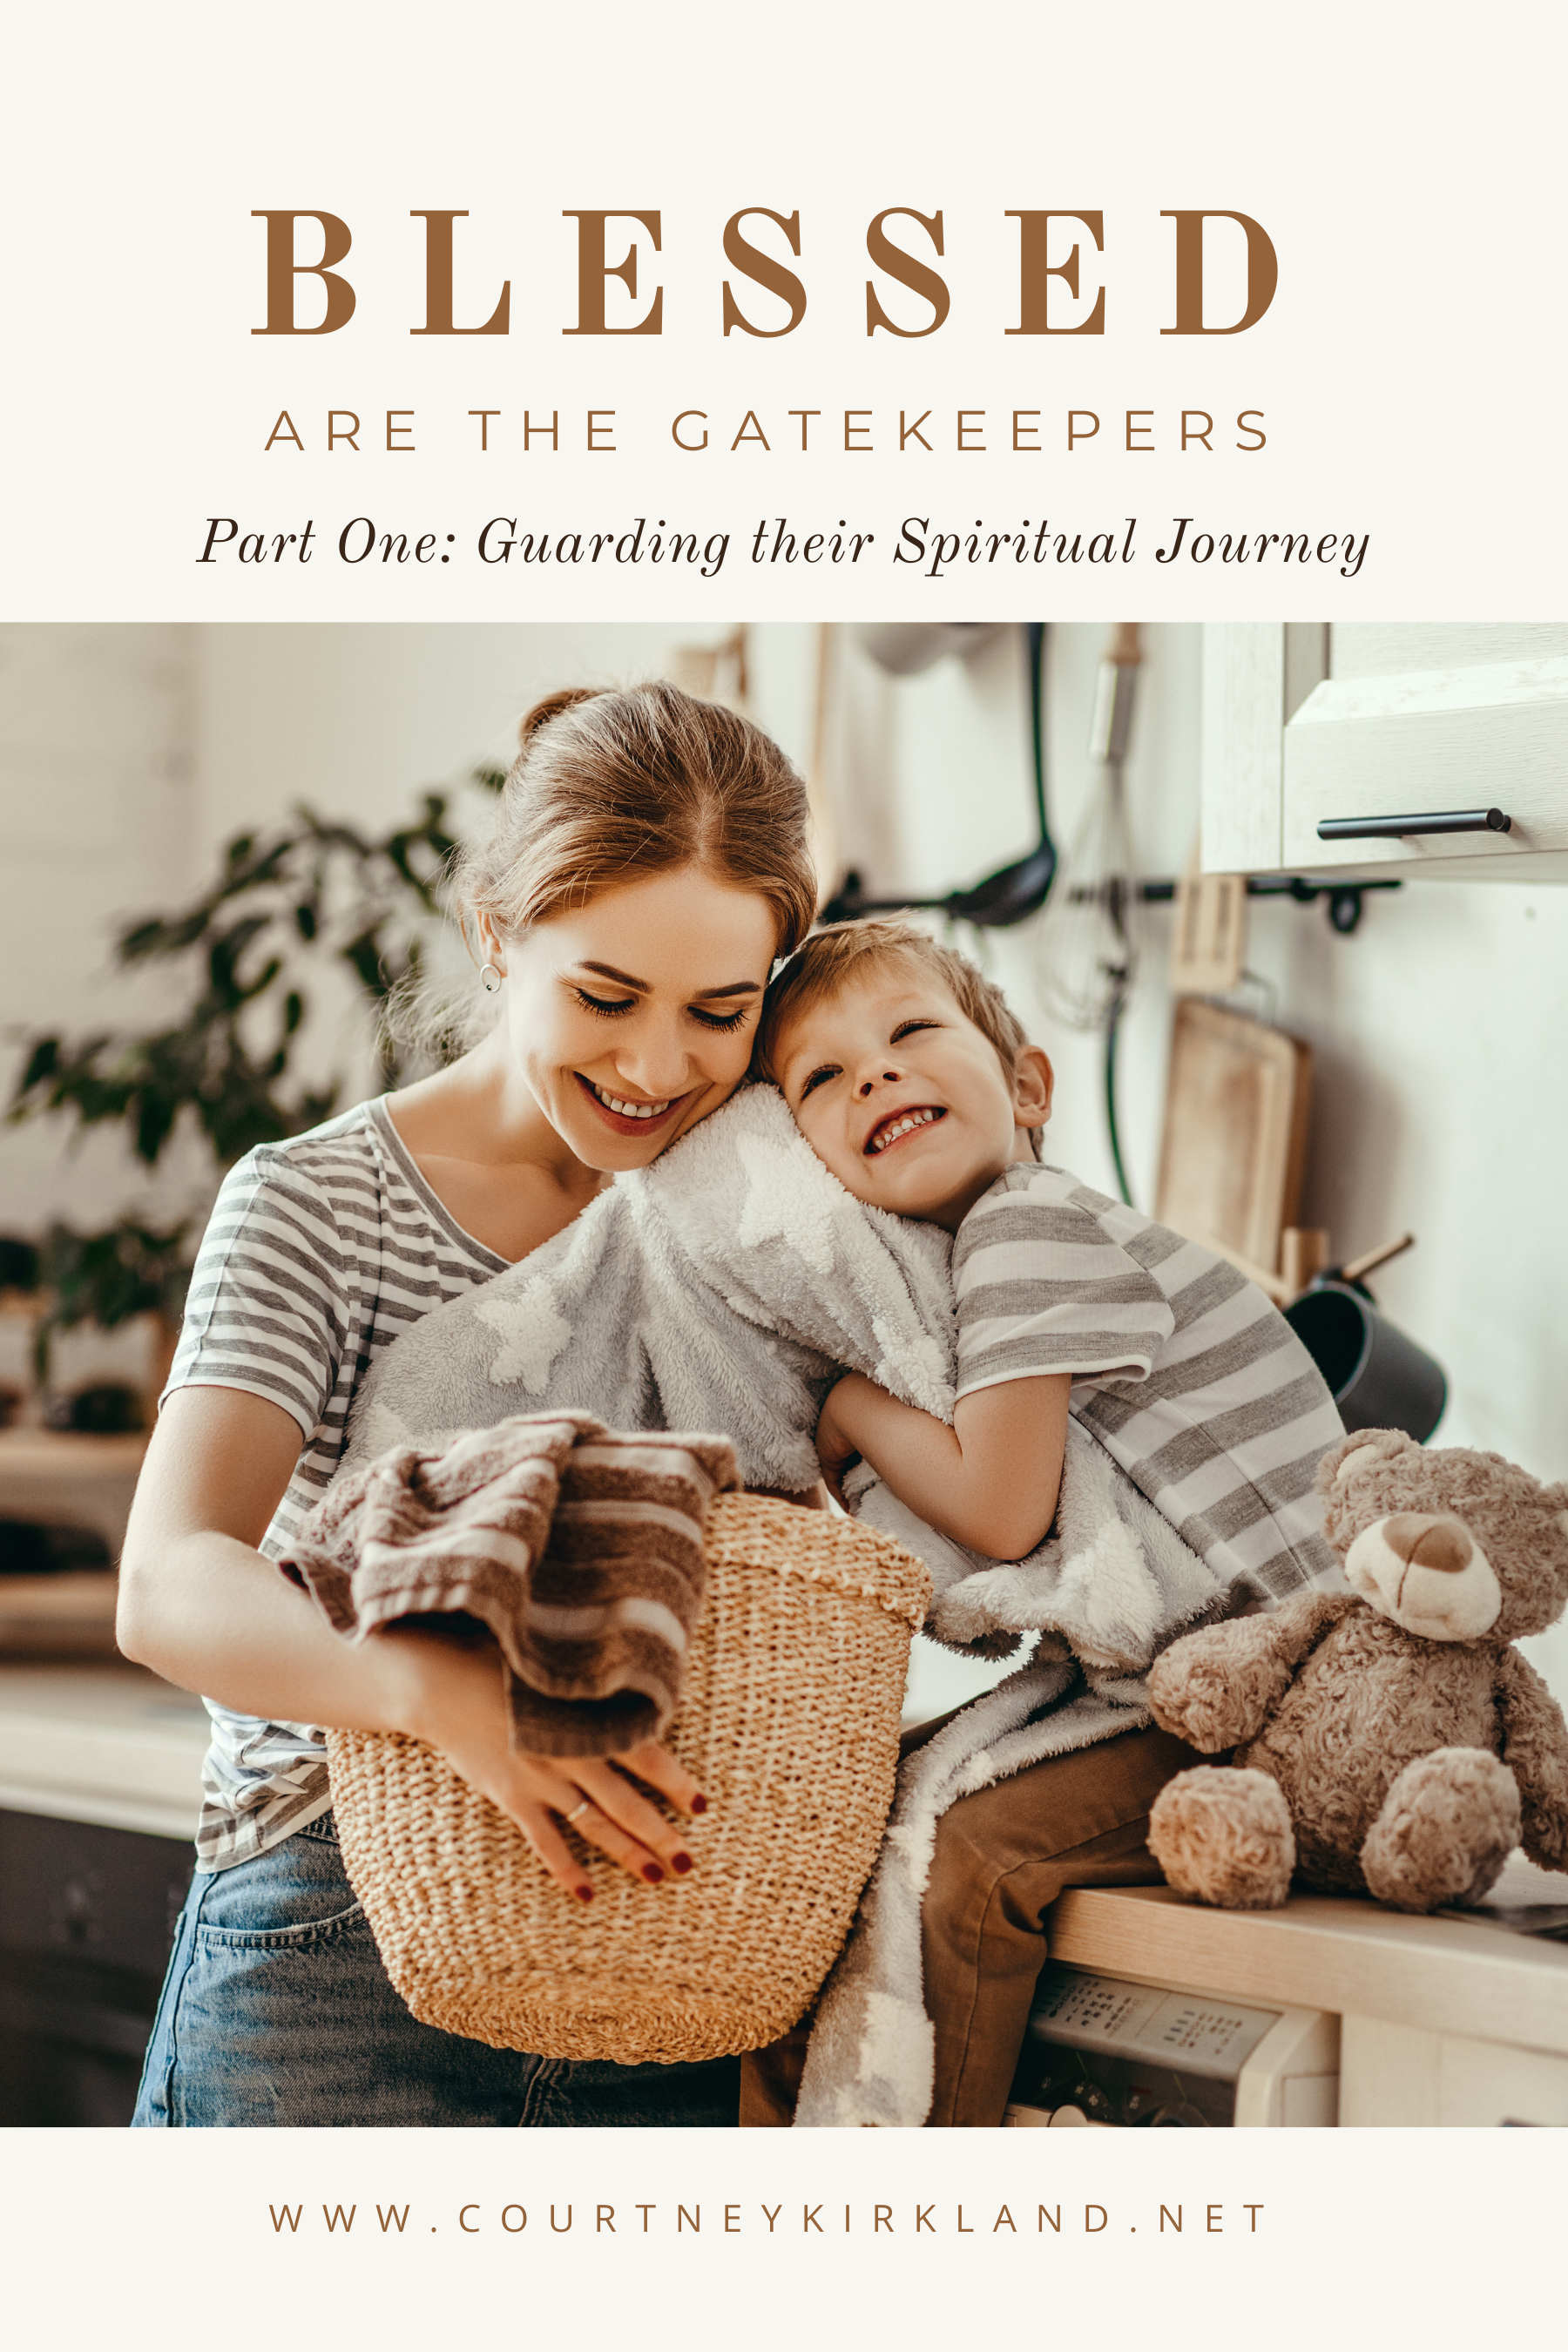 Guarding our family's Spiritual Journey | Courtney Kirkland